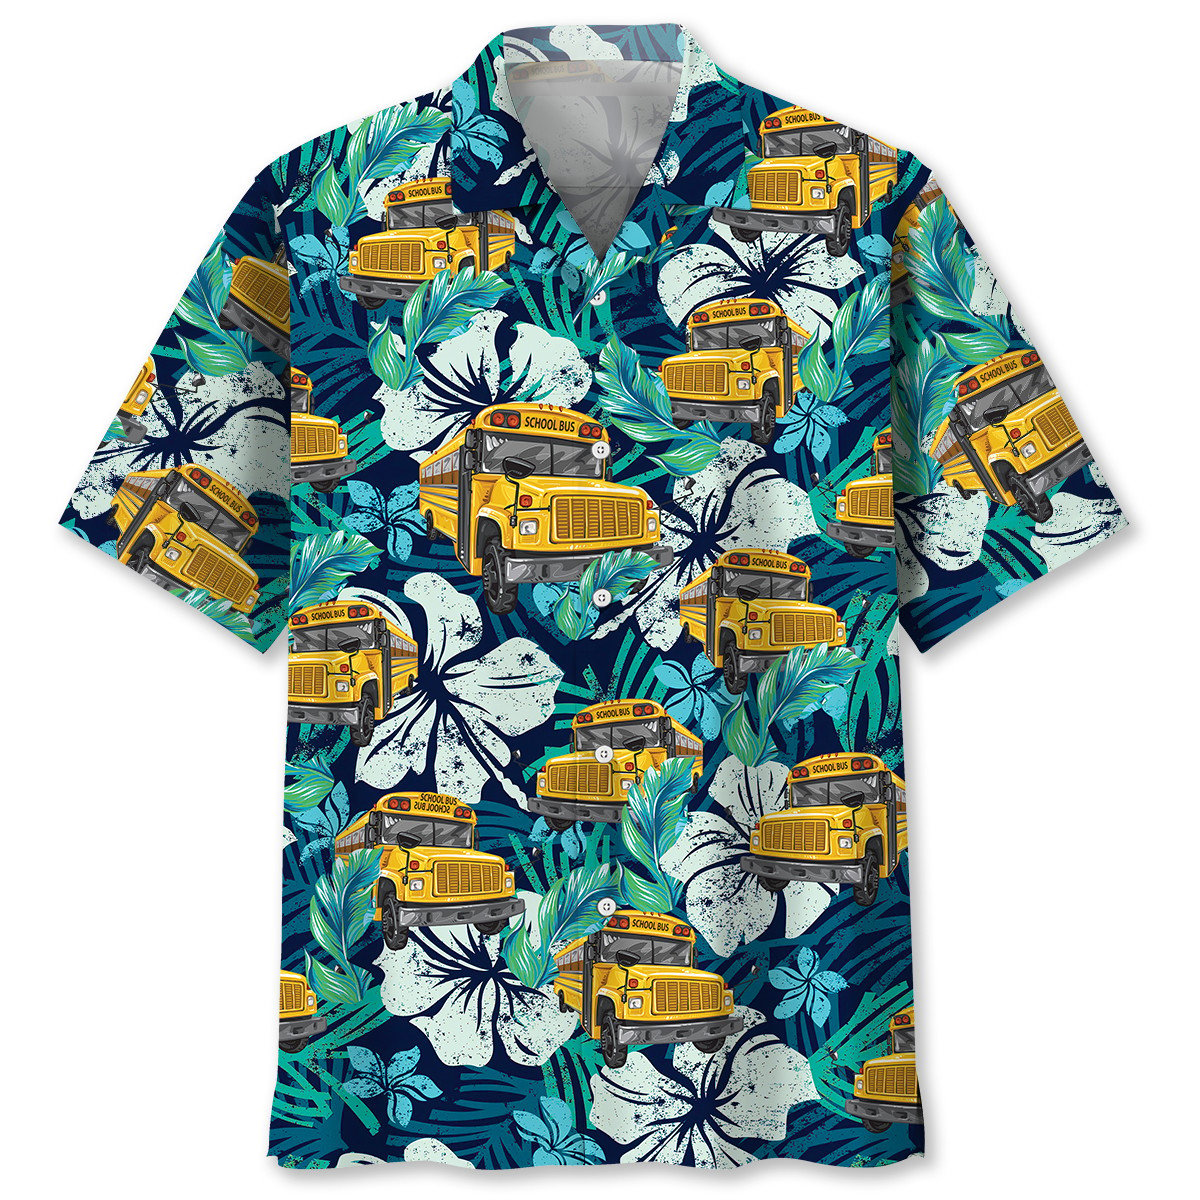 School Bus Tropical Hawaiian Shirt/ Perfect Shirt for School Bus Driver